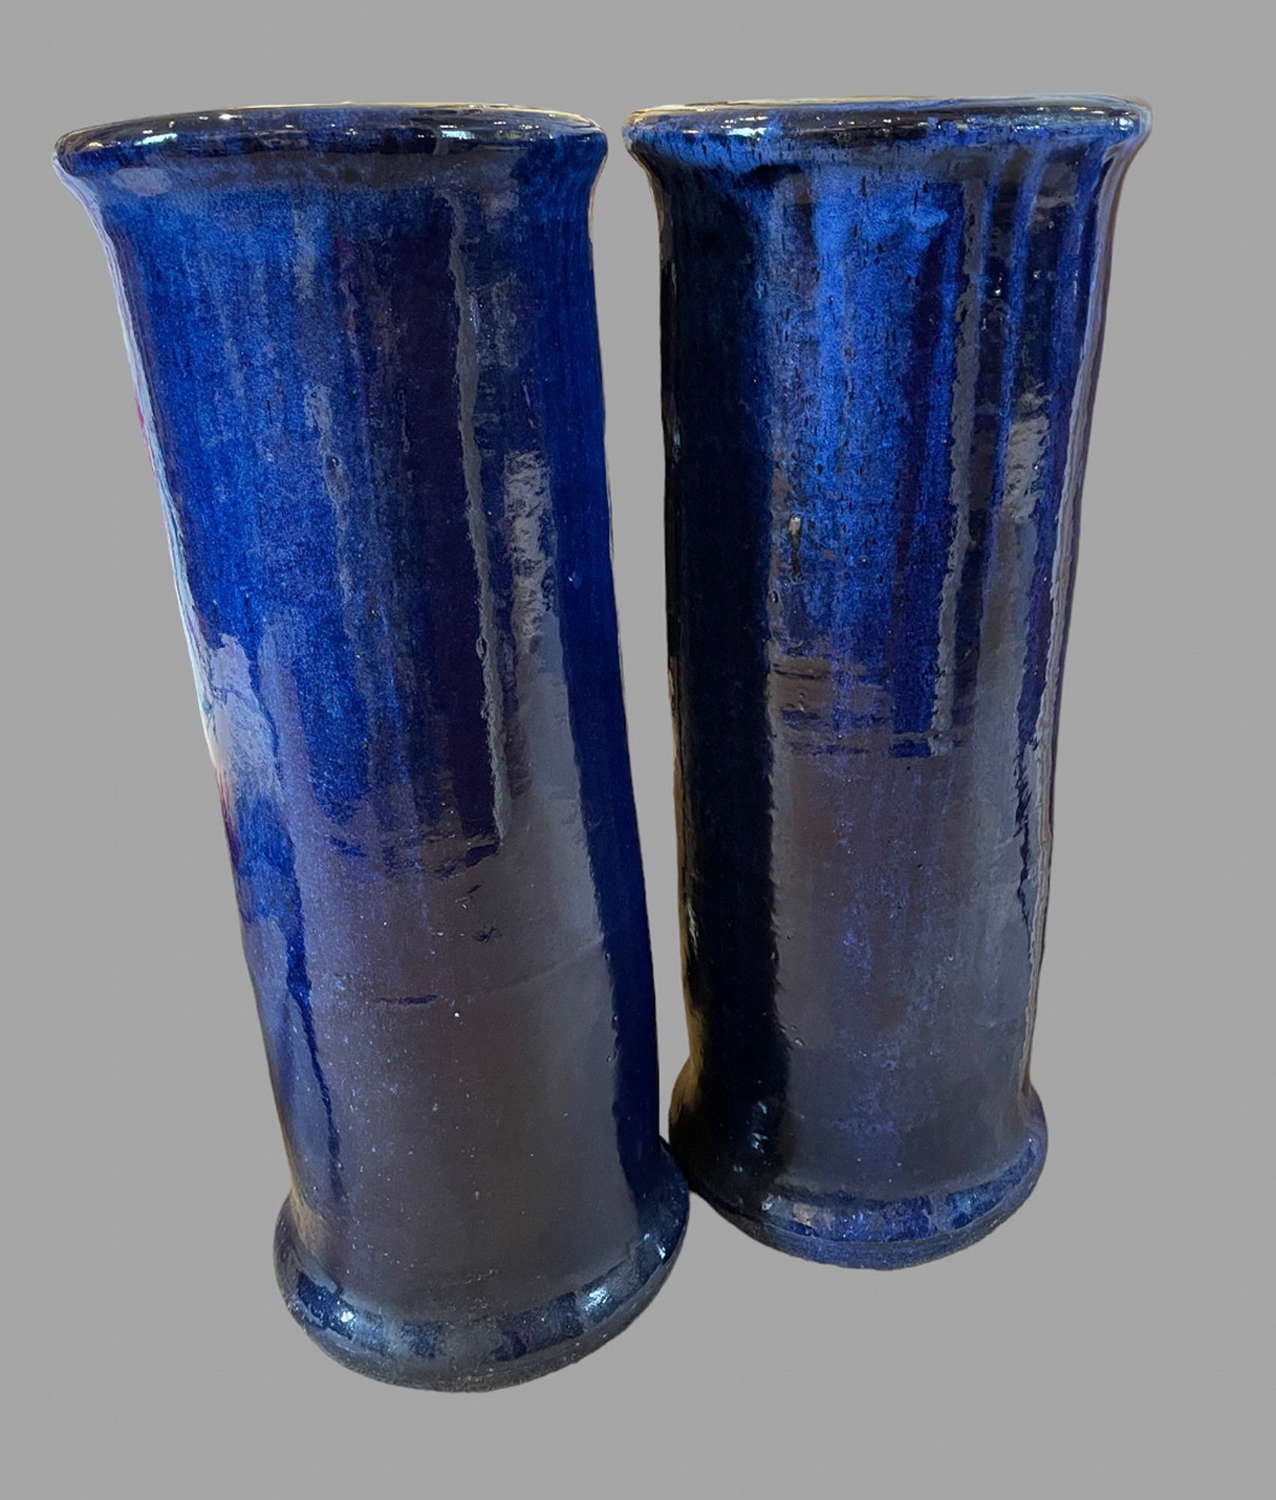 A Pair of Decorative Blue/Grey Pottery Pedestals